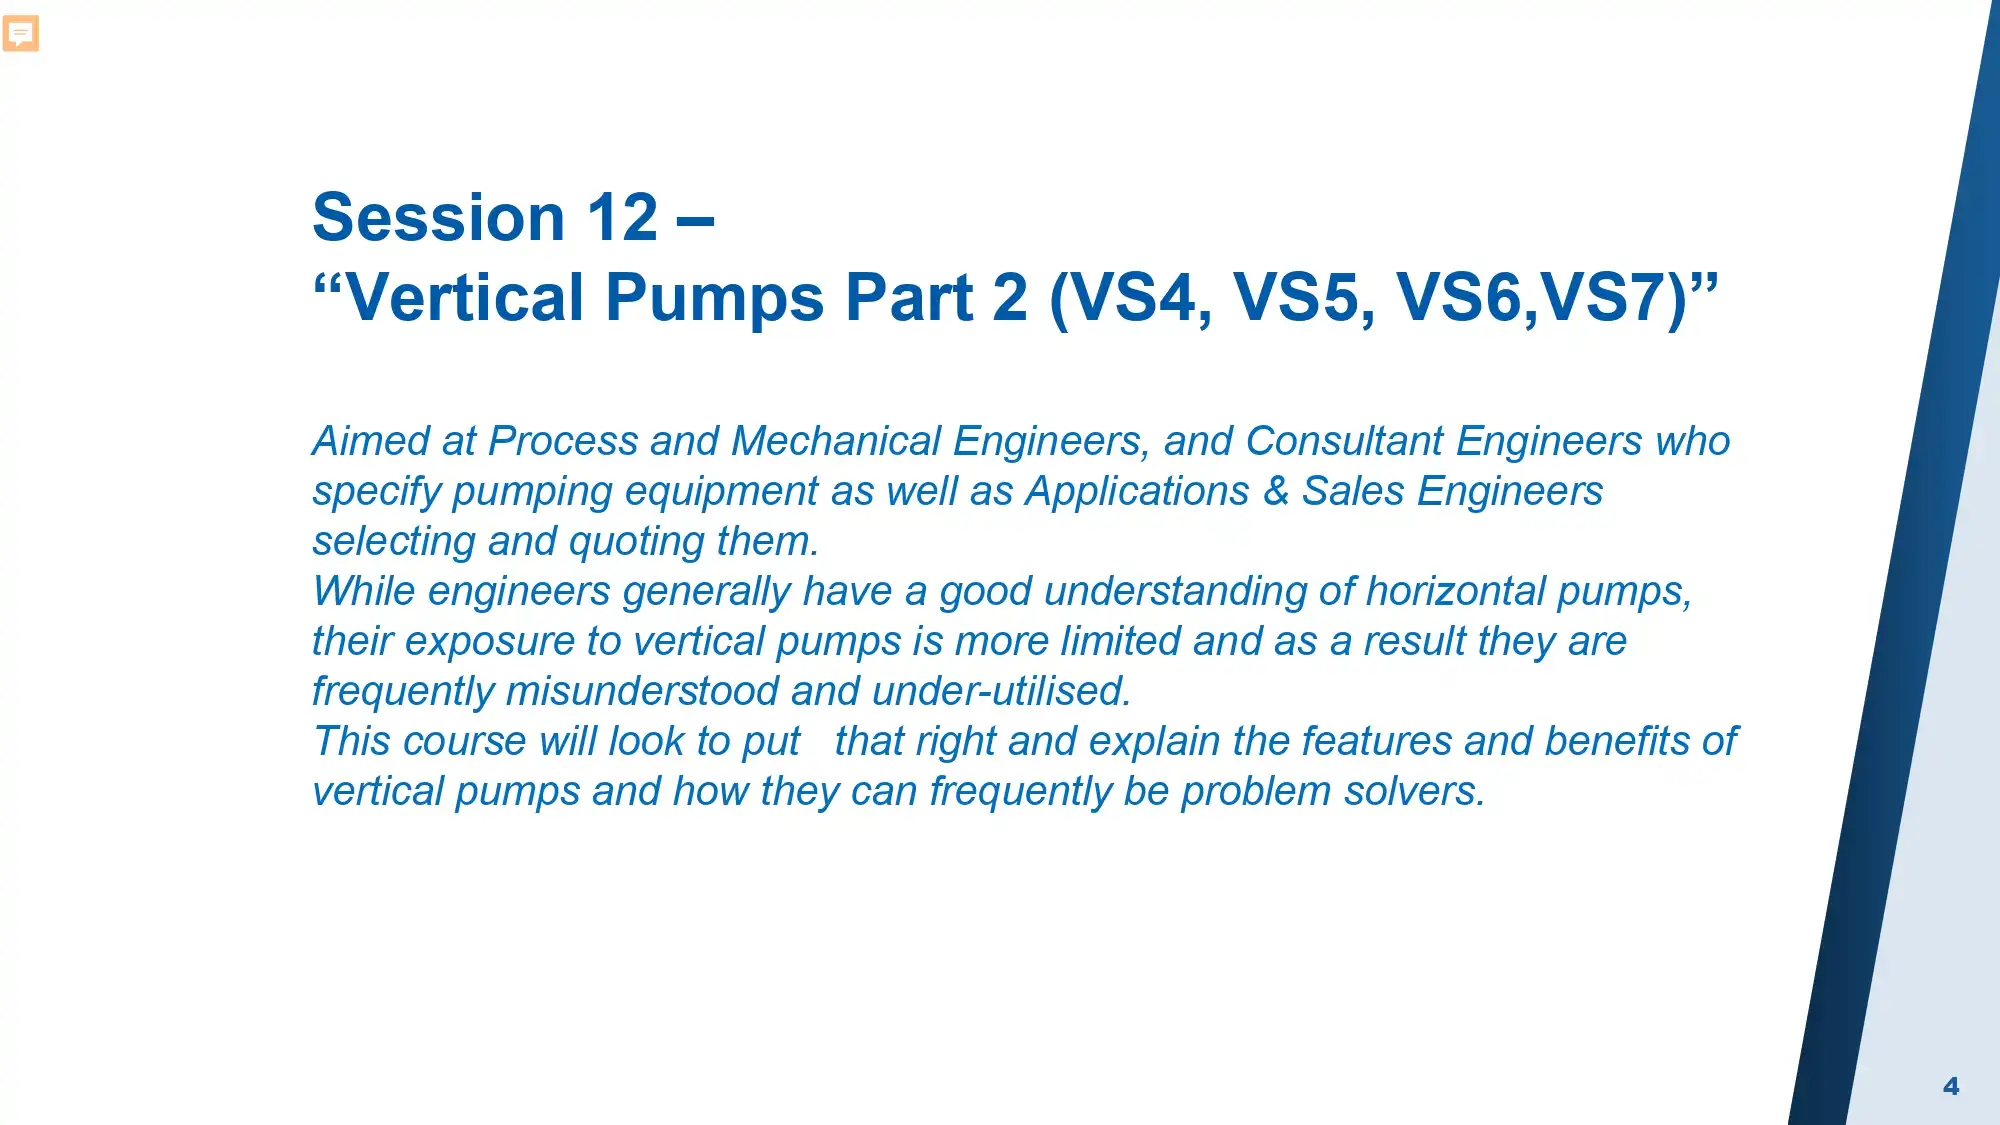 Session 12 – “Vertical Pumps Part 2 (VS4, VS5, VS6, VS7)”